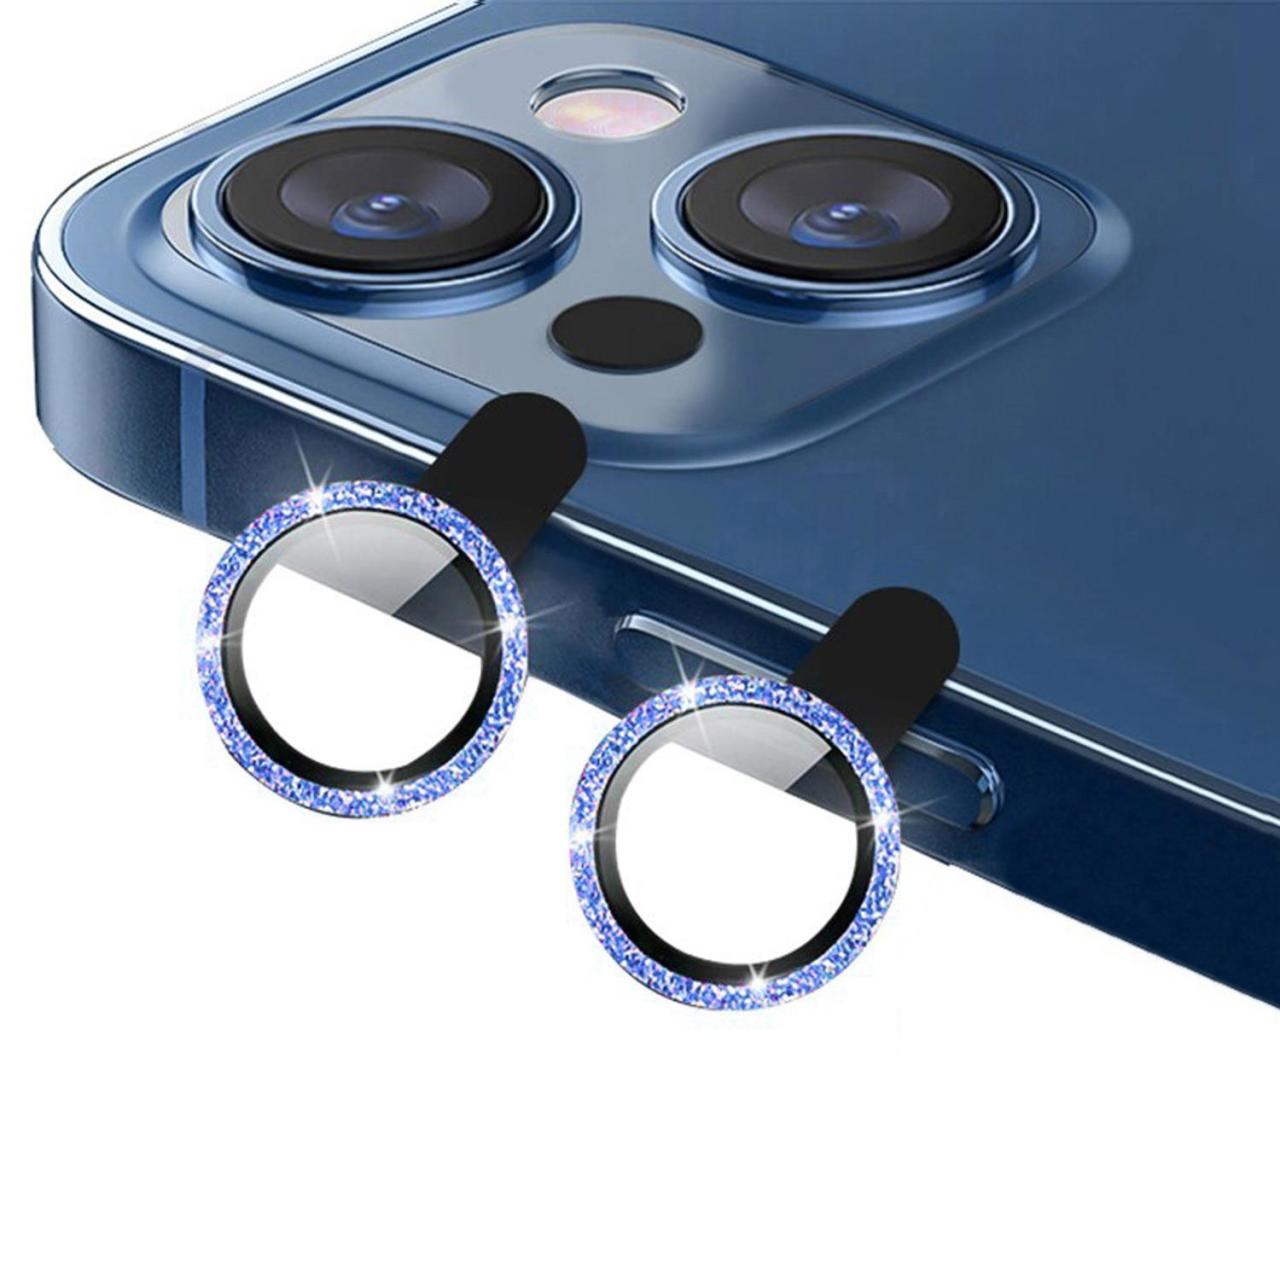 Microcase iPhone 13 mini Elmas Taş Lens Koruma Halkası - Mavi AL2775